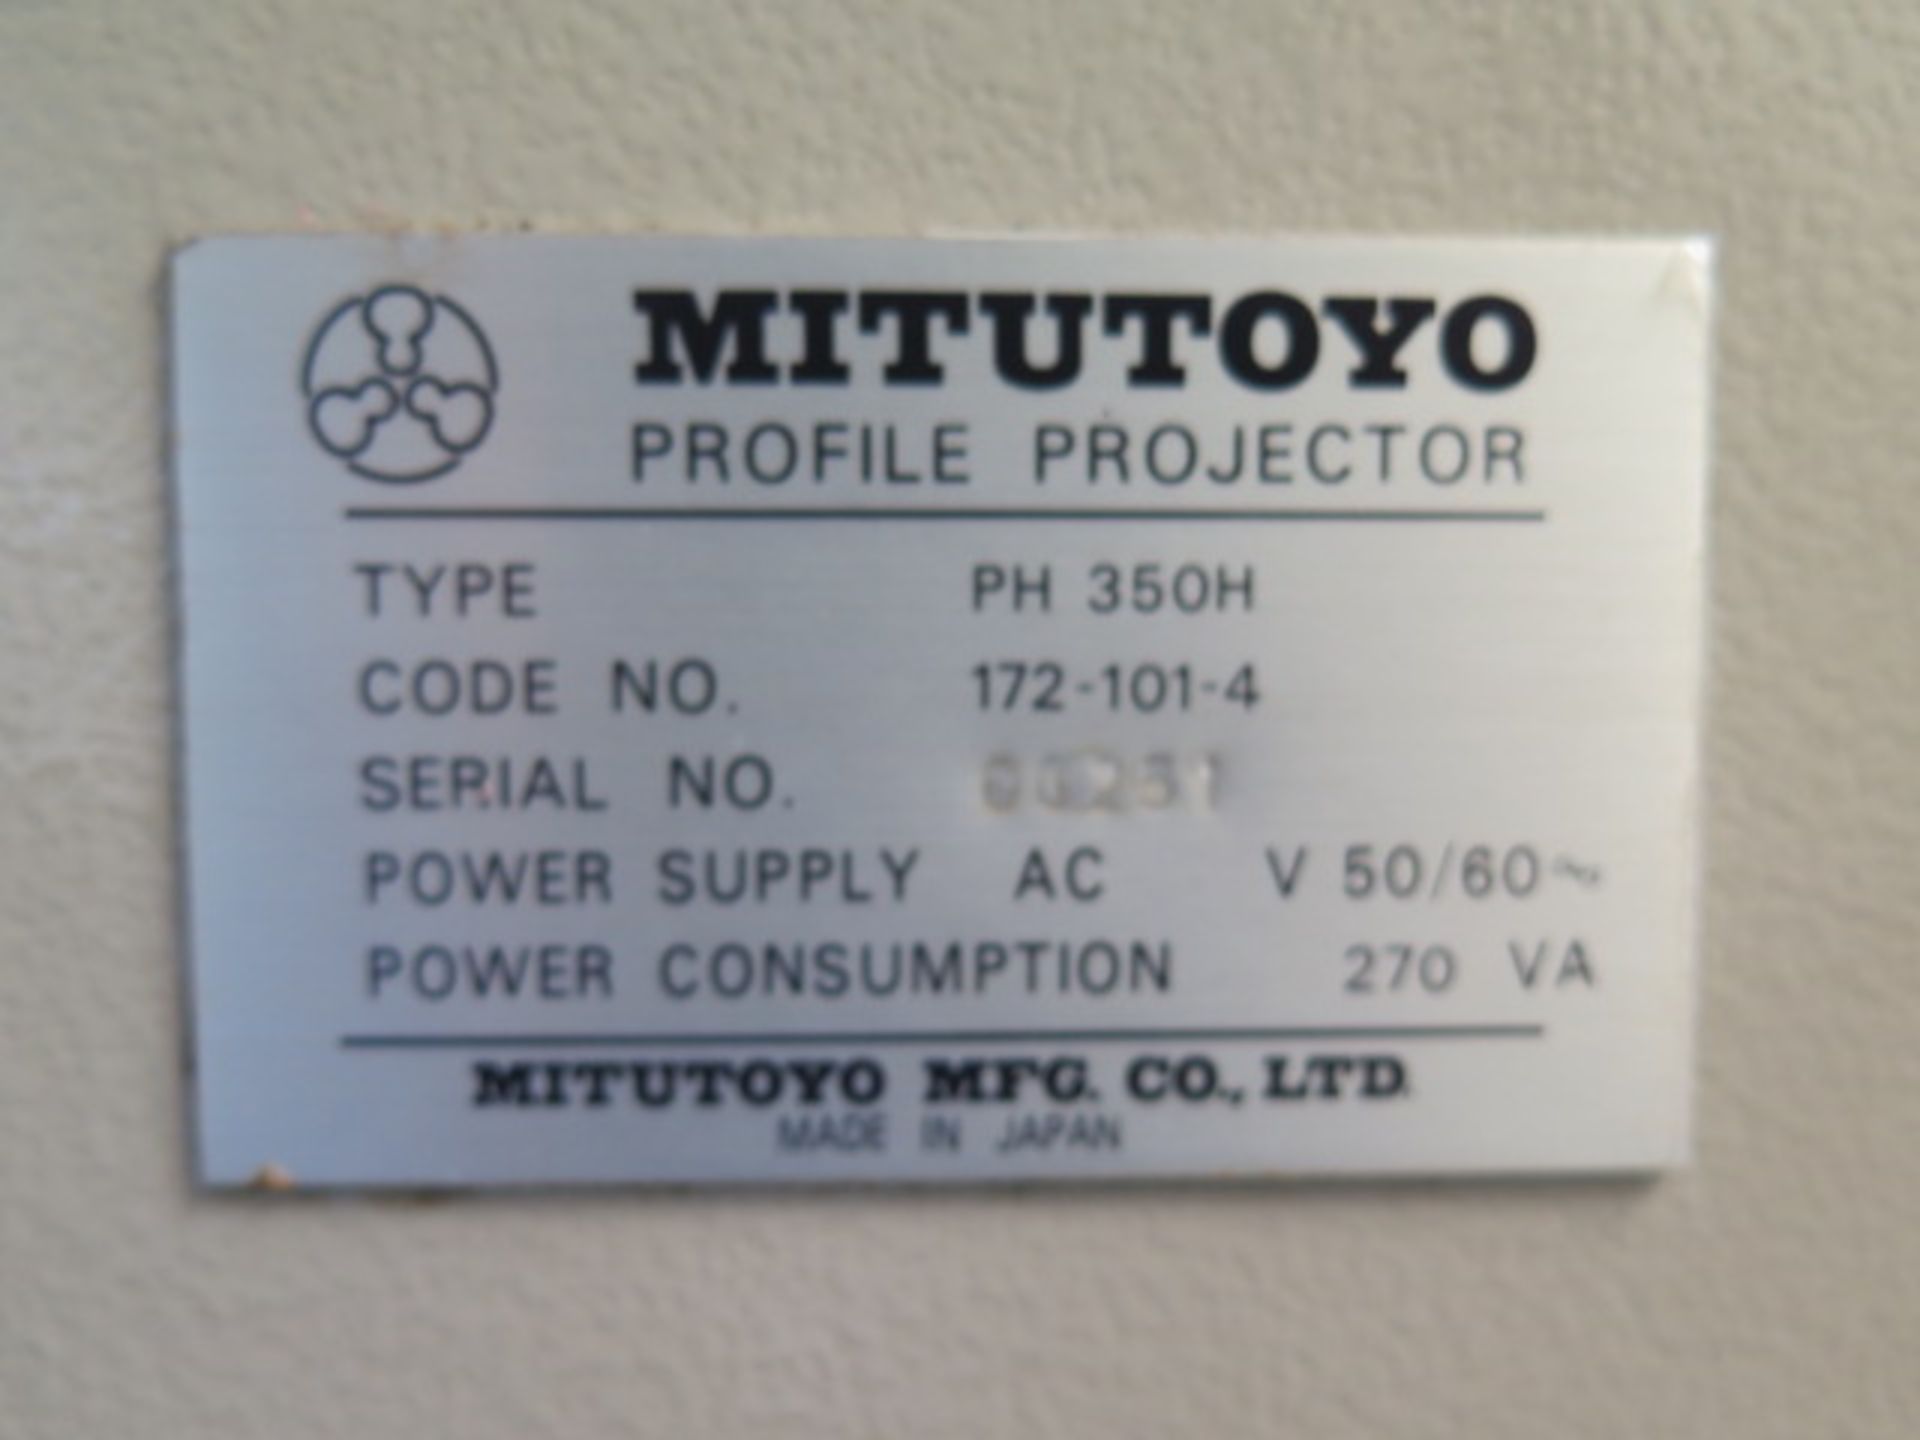 Mitutoyo PH350 13" Optical Comparator s/n 60251 w/ Optoeye M1 Edge Detector, Dial Indicator - Image 8 of 8